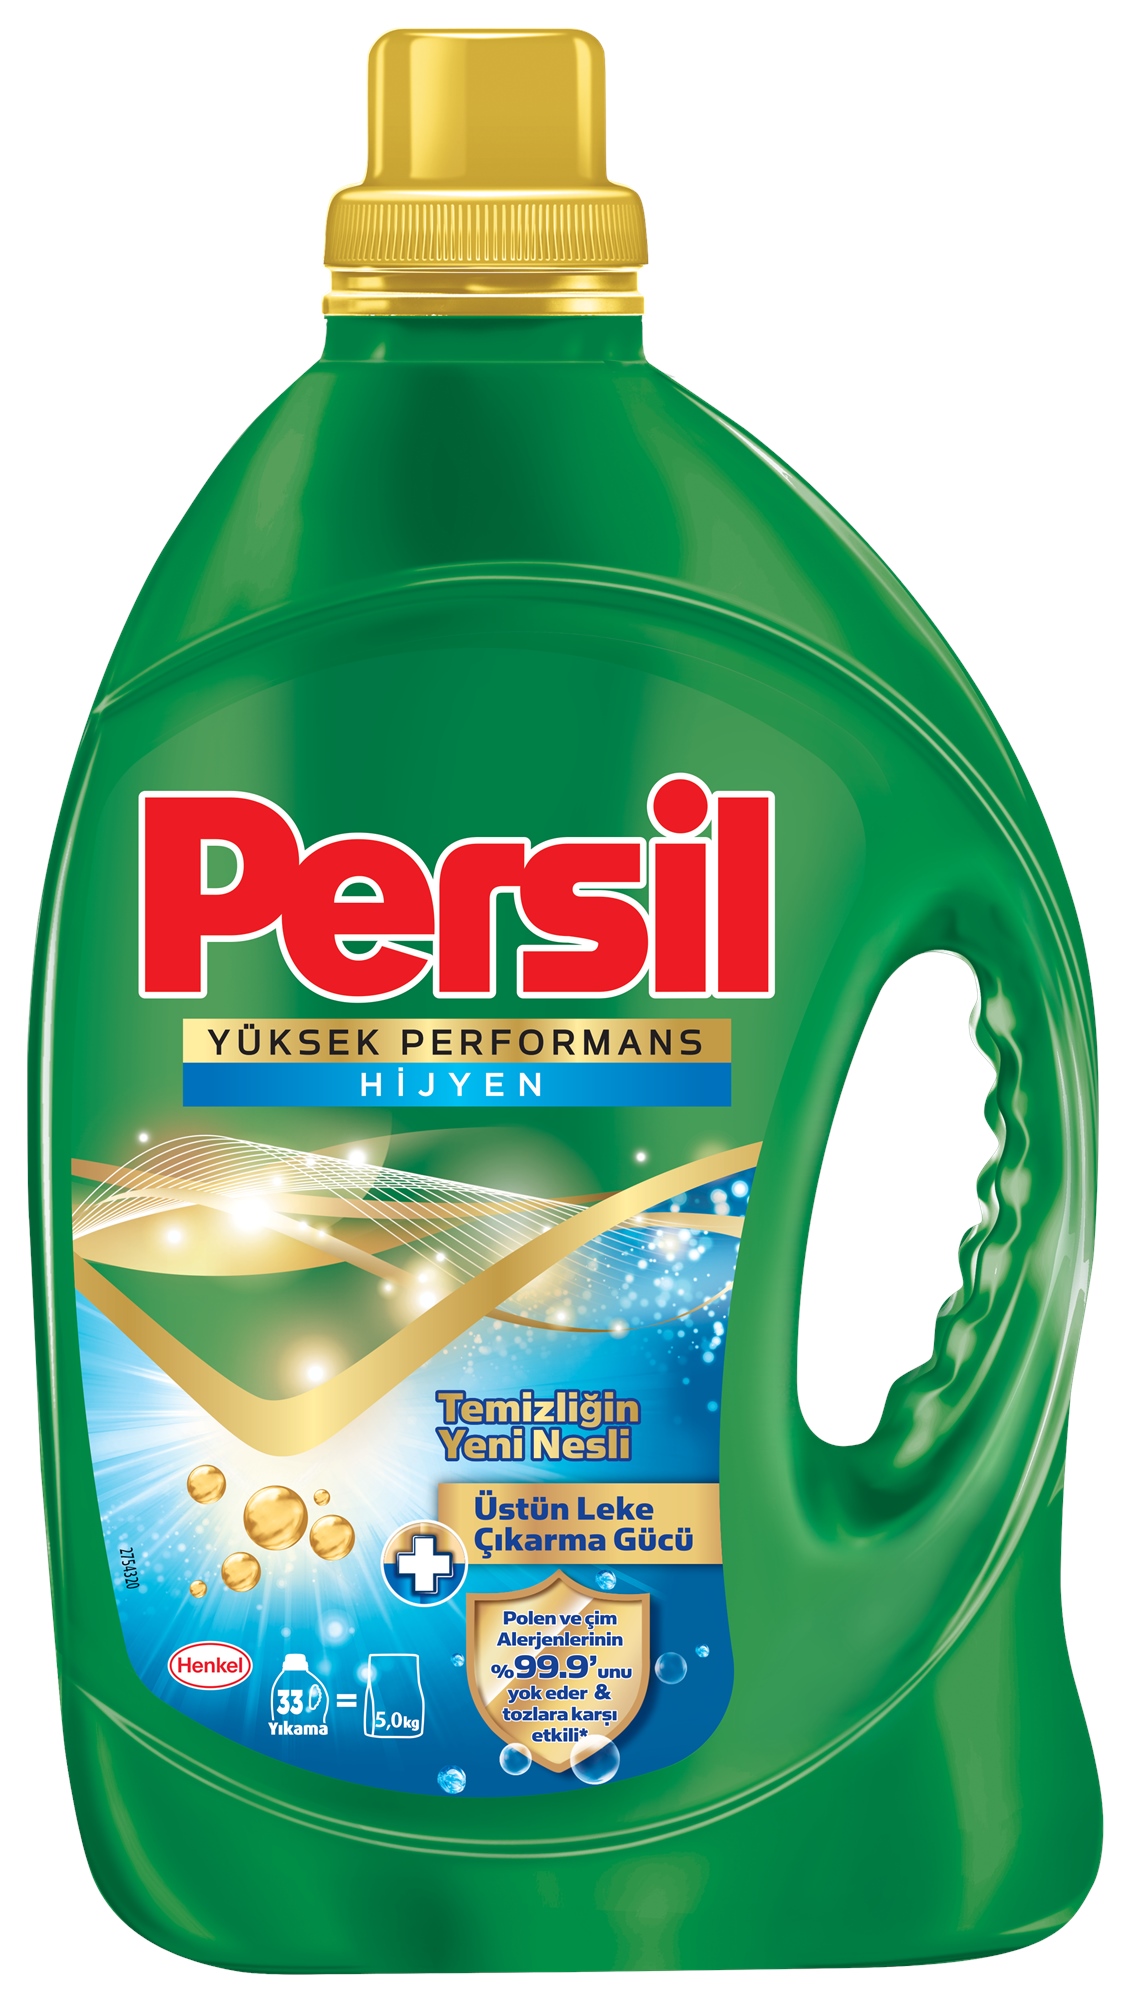 Persil Sıvı Deterjan 33 Yıkama 2.24 kg Hijyen - Onur Market